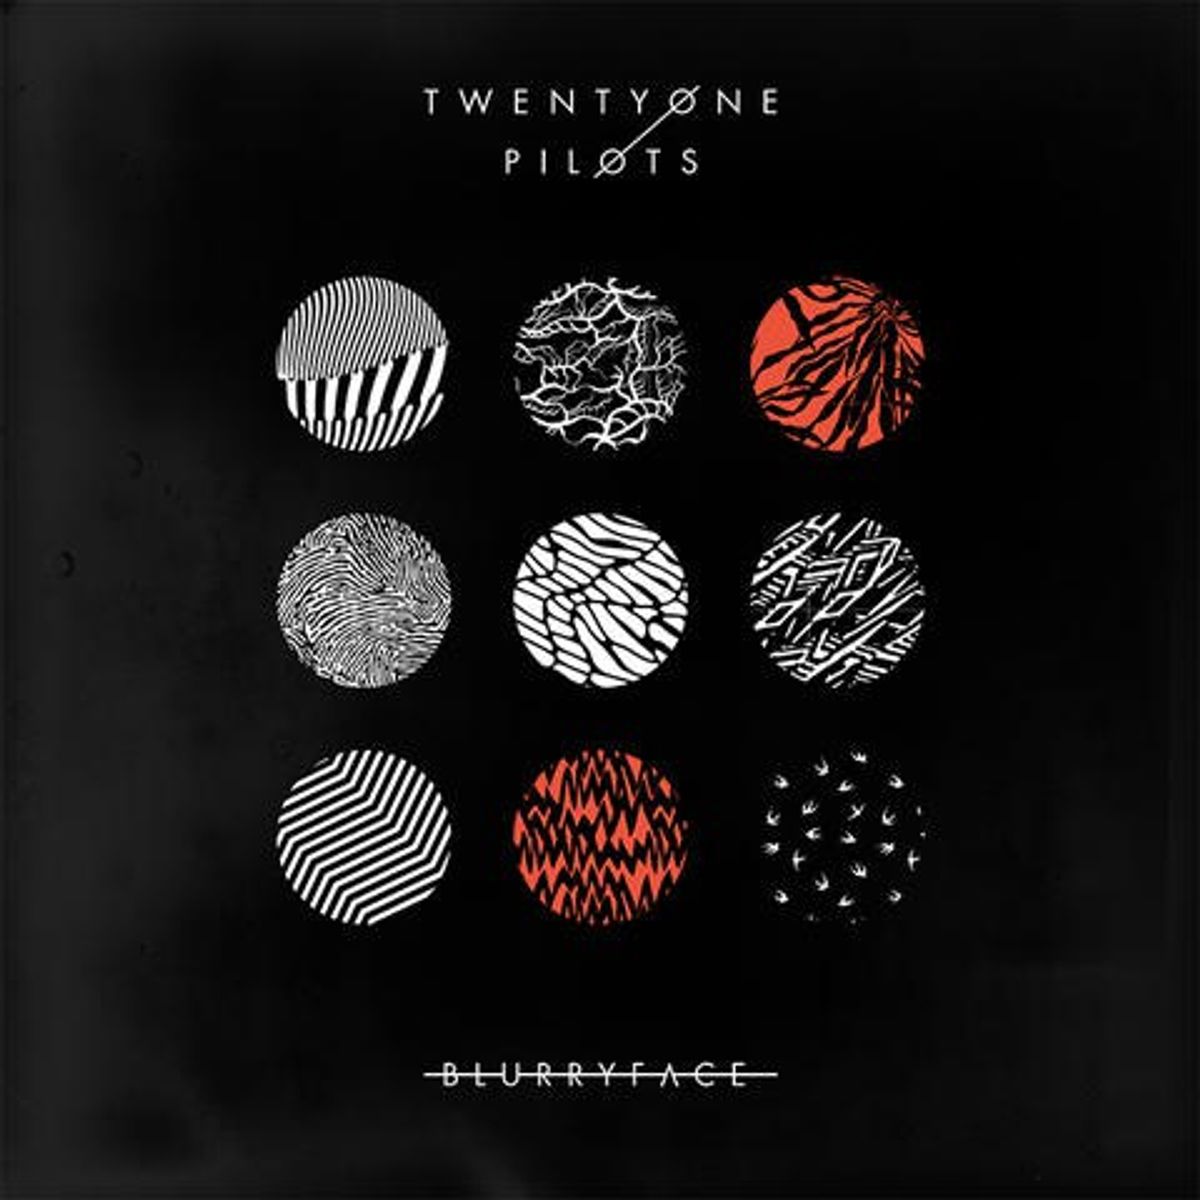 Album Review: "Blurryface" By Twenty One Pilots